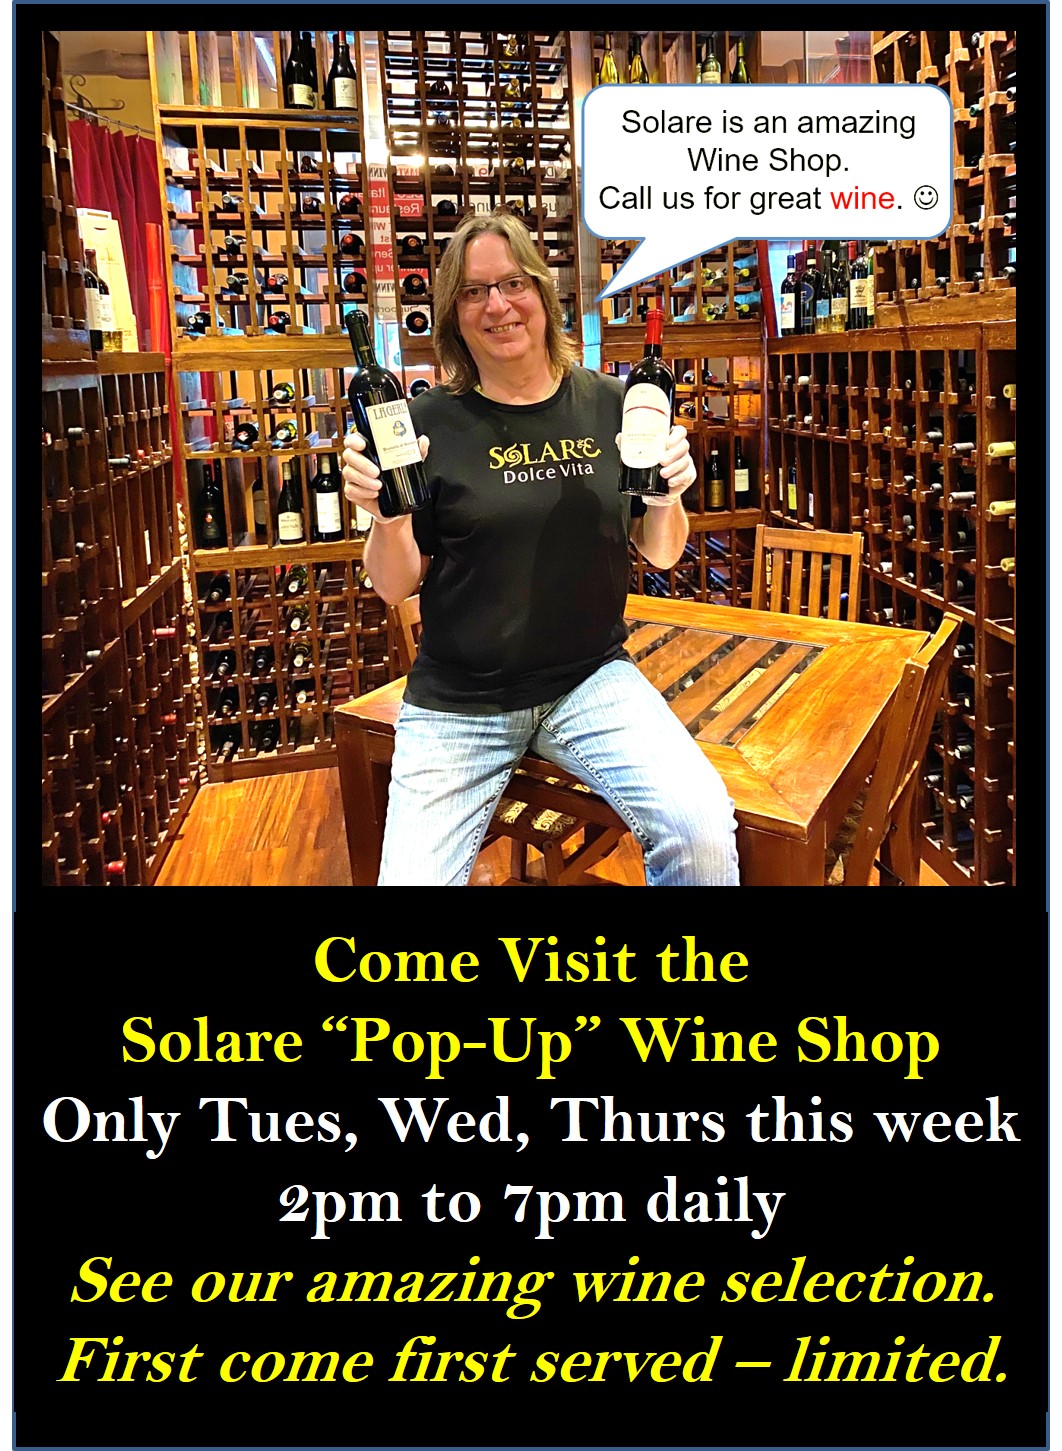 Solare "Pop-Up" Wine Shop